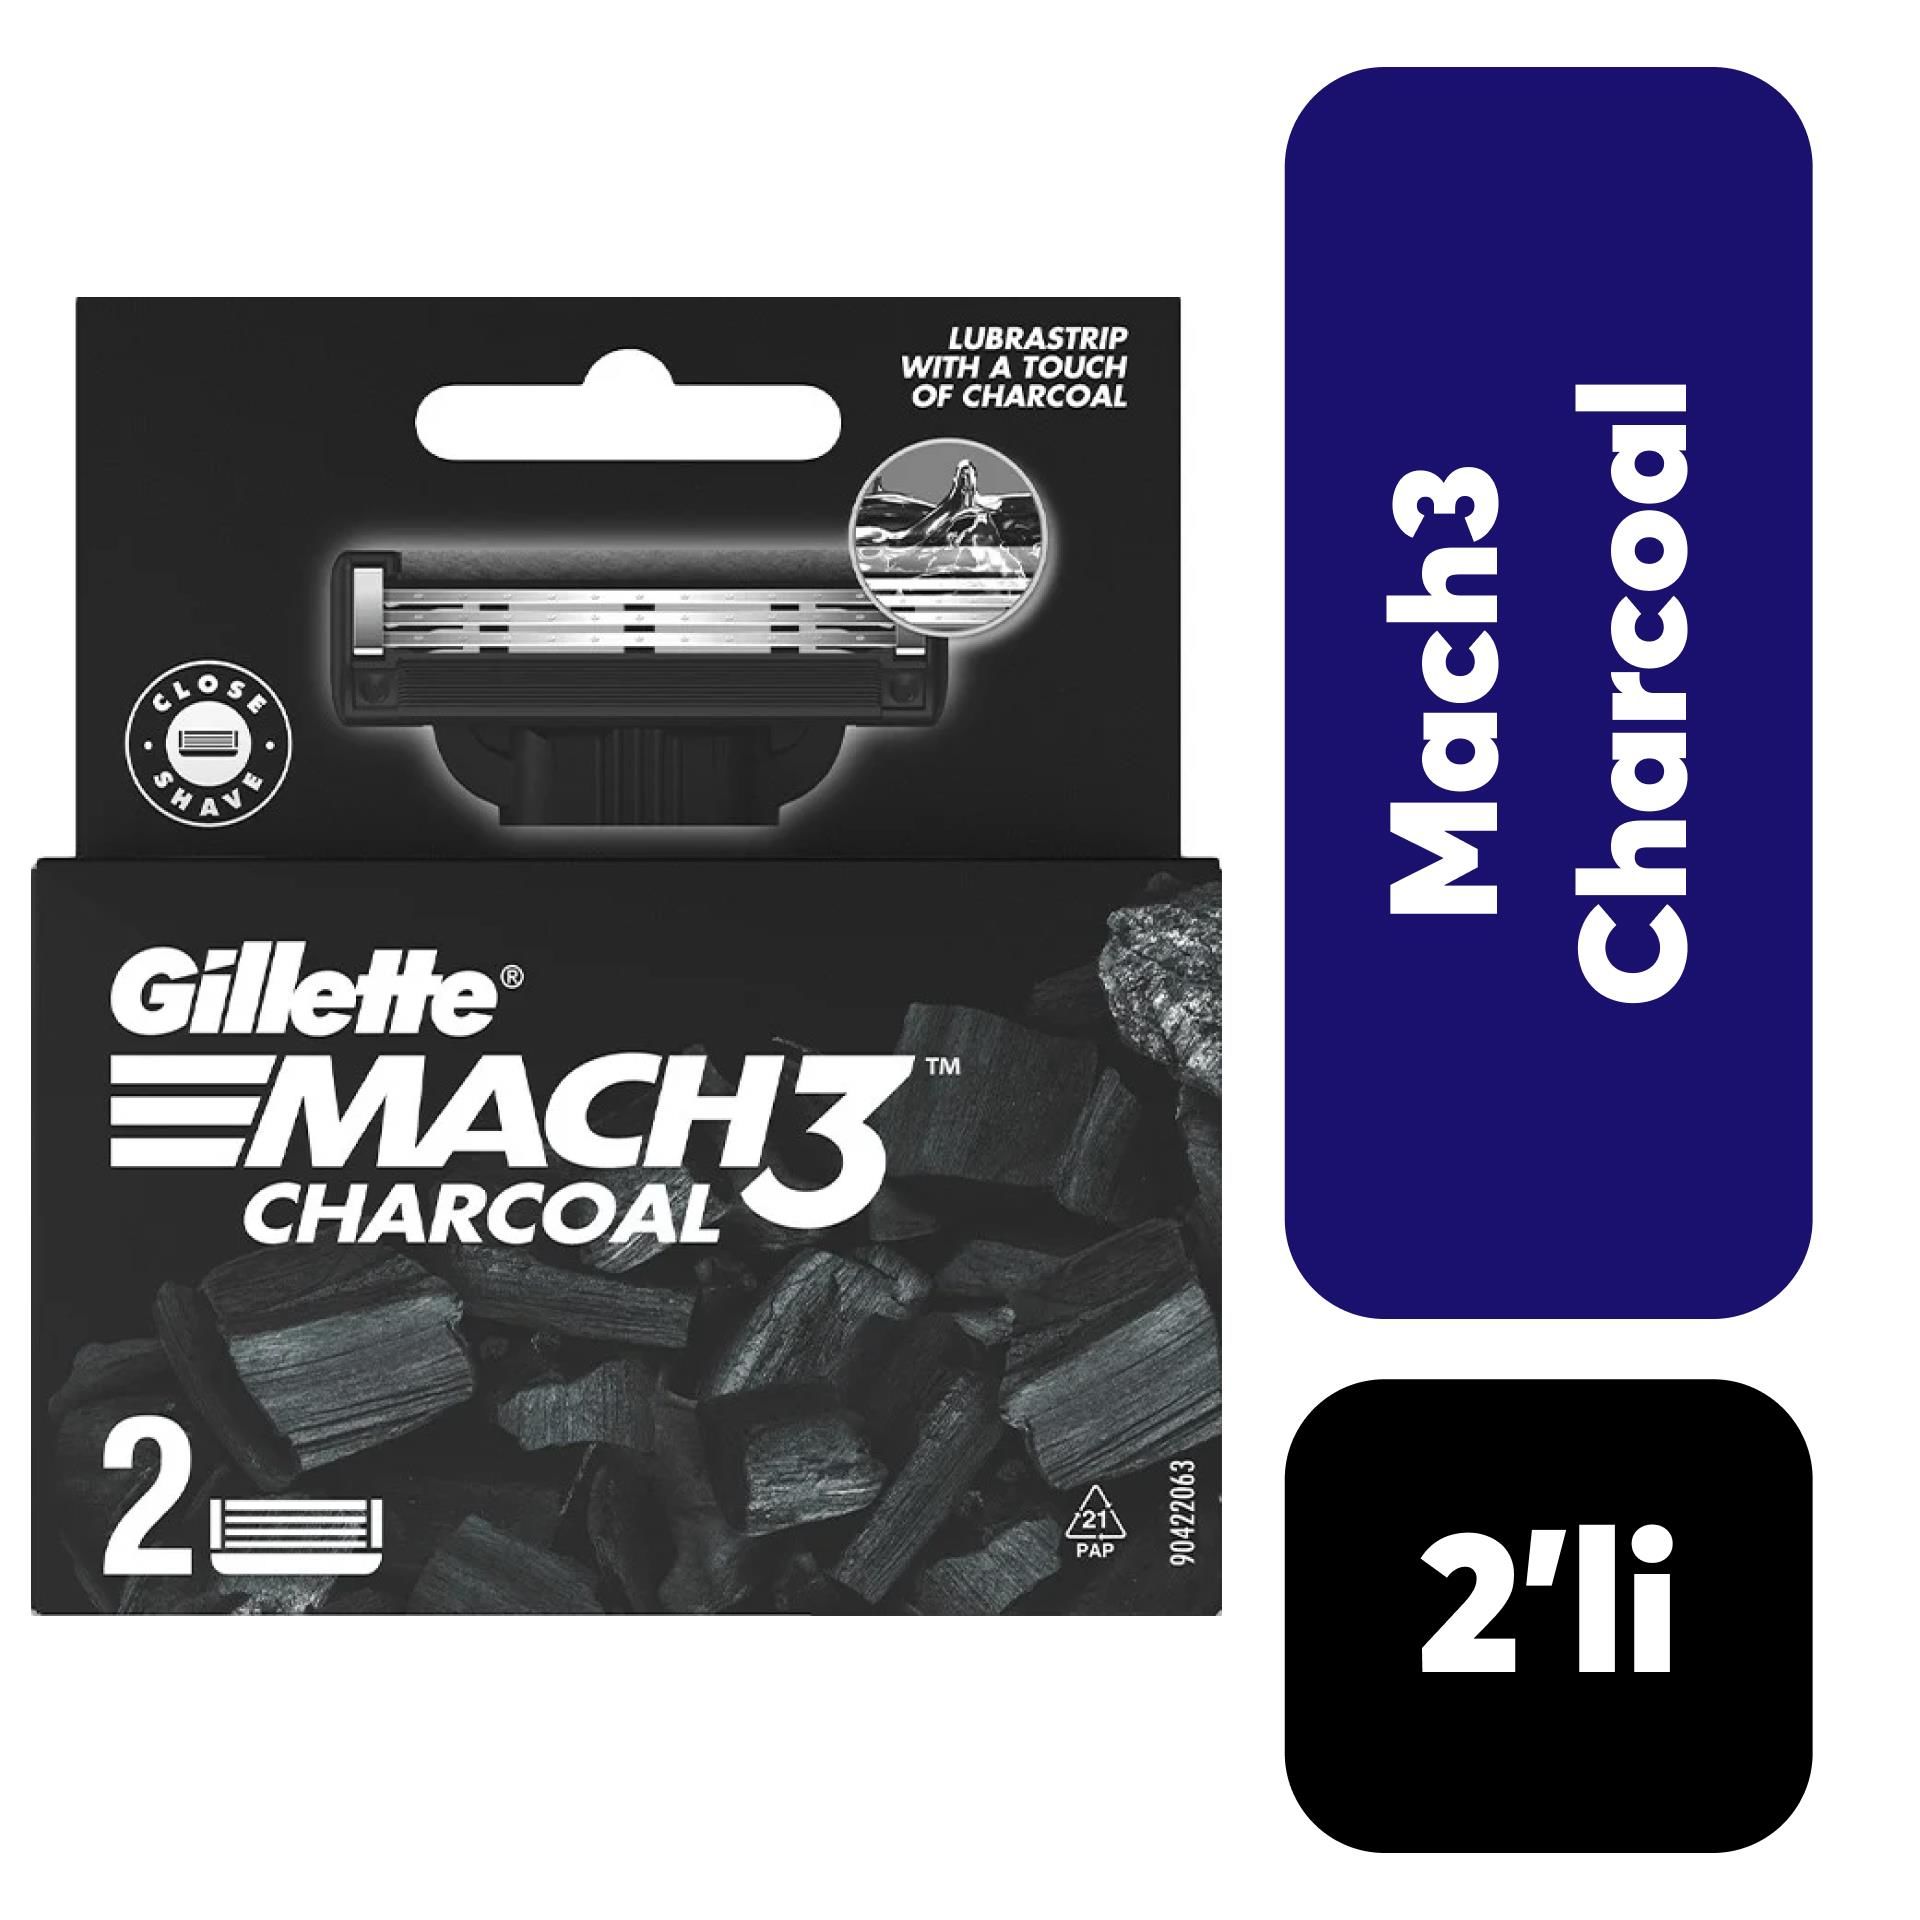 Gillette Yedek Başlık Mach3 Charcoal 2’li